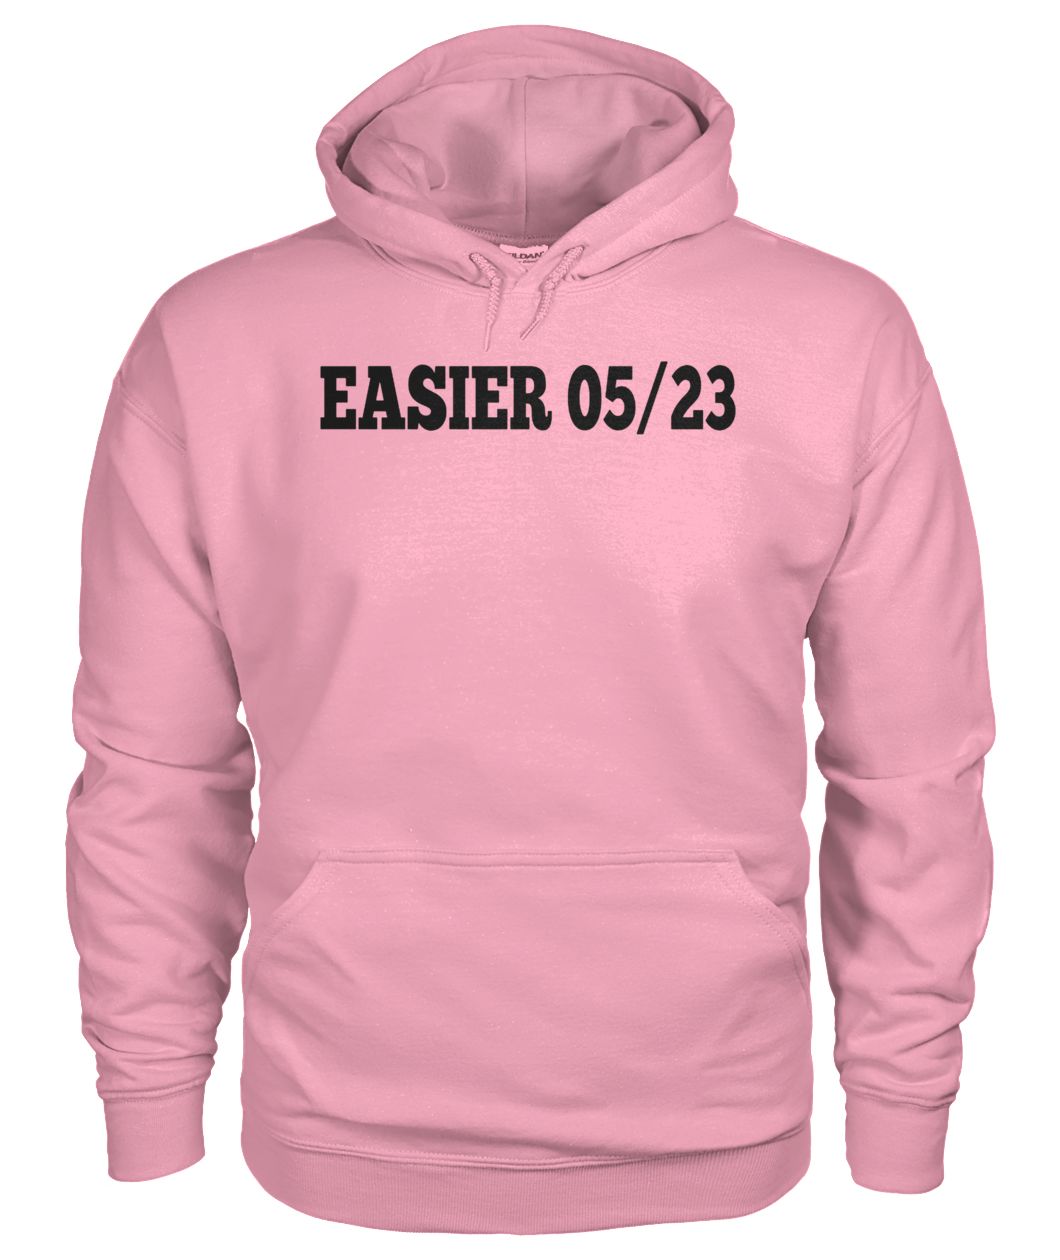 Ashton irwin easier 0523 gildan hoodie